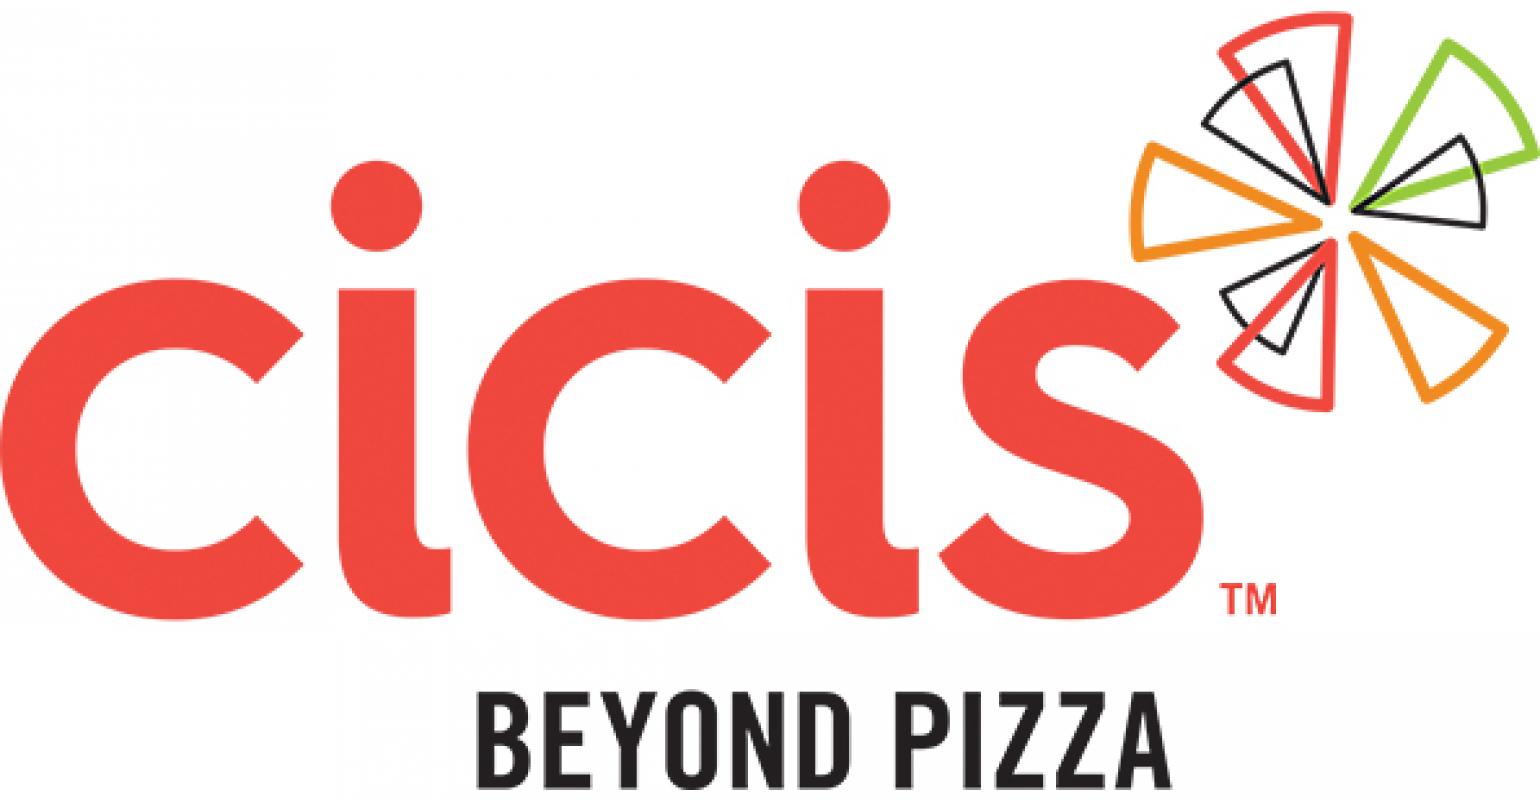 Cicis pizza restaurant chain debuts new branding Nation's Restaurant News